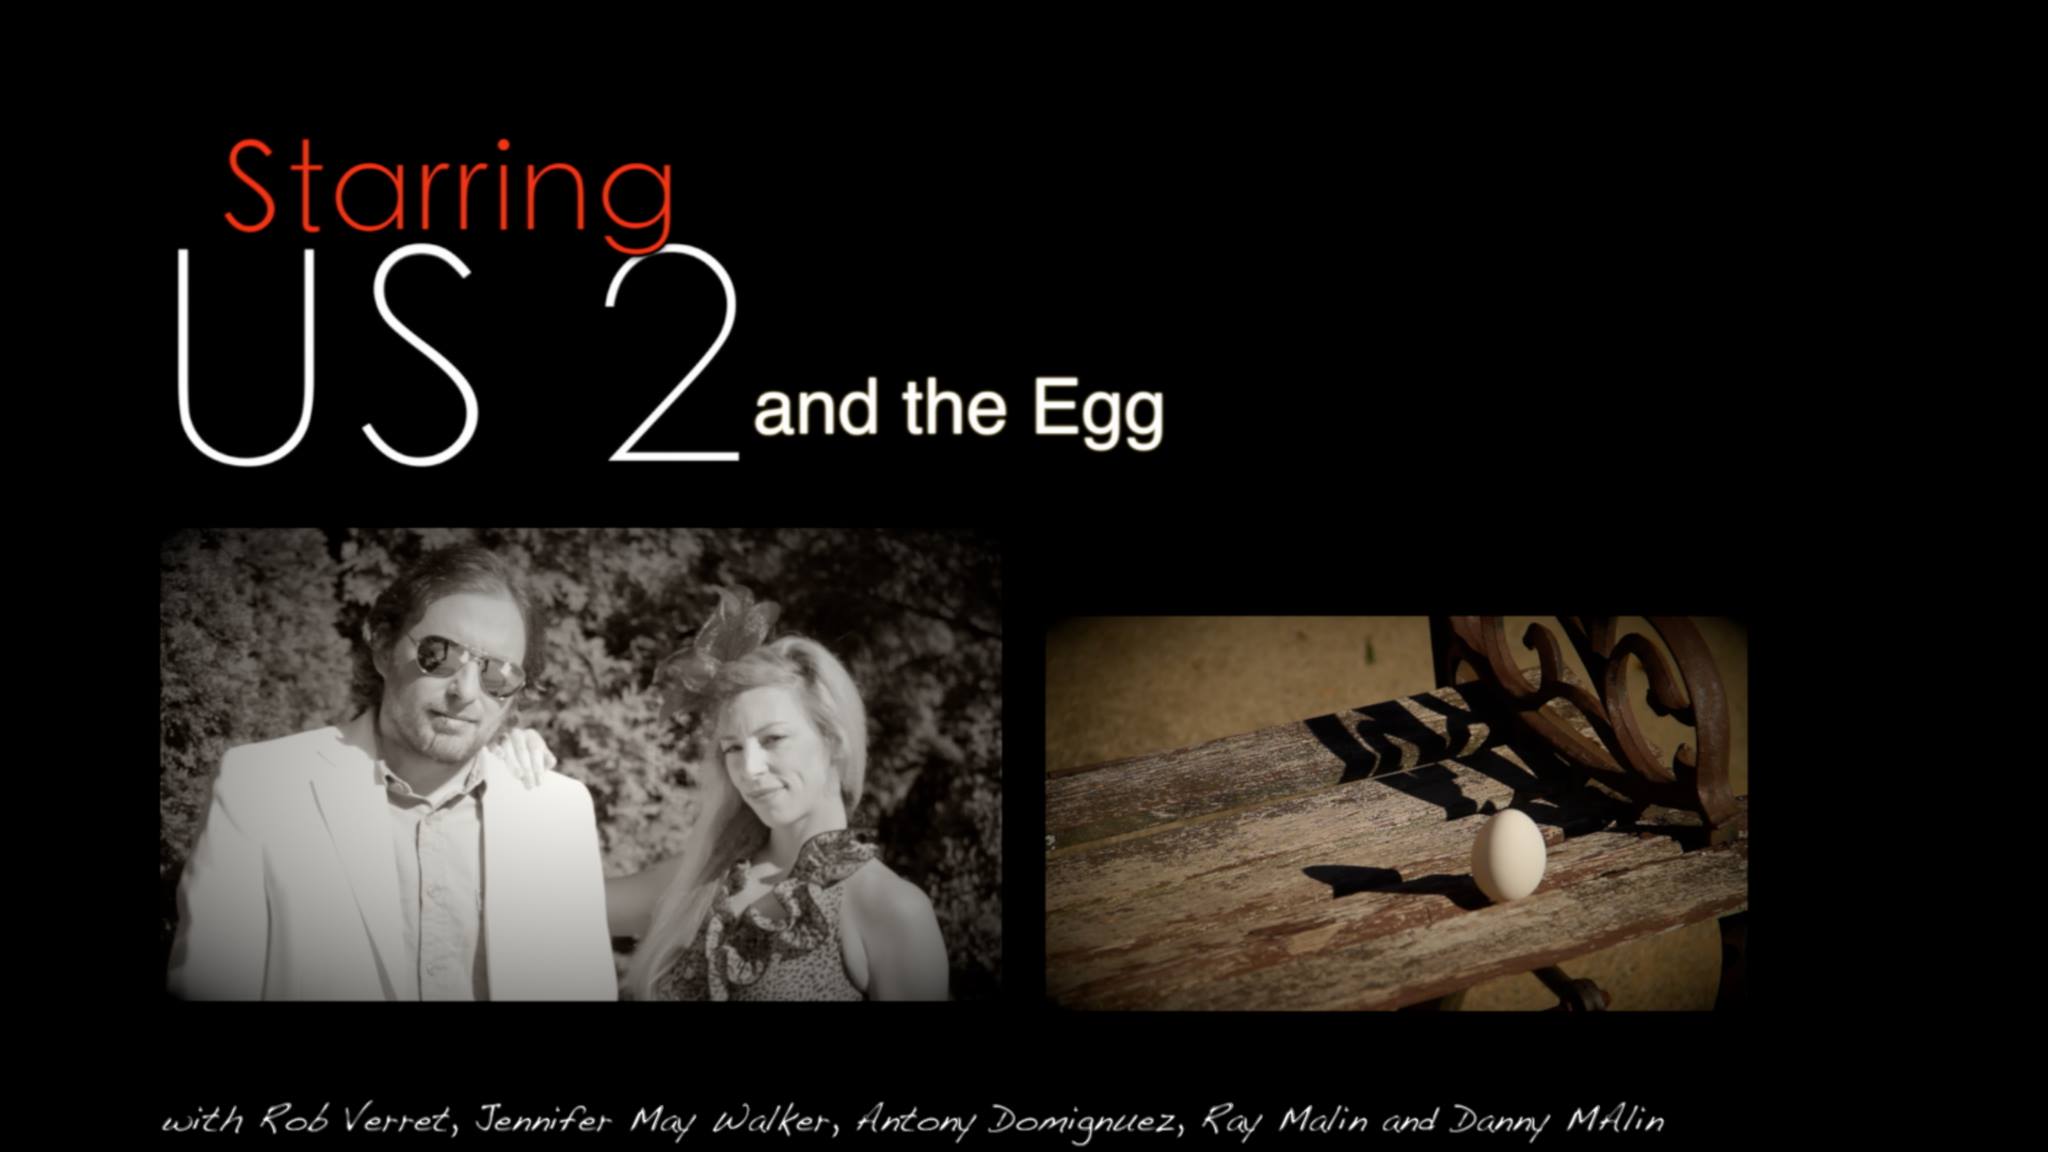 Rob Verret, Jennifer May Walker and The Egg. Film poster for 